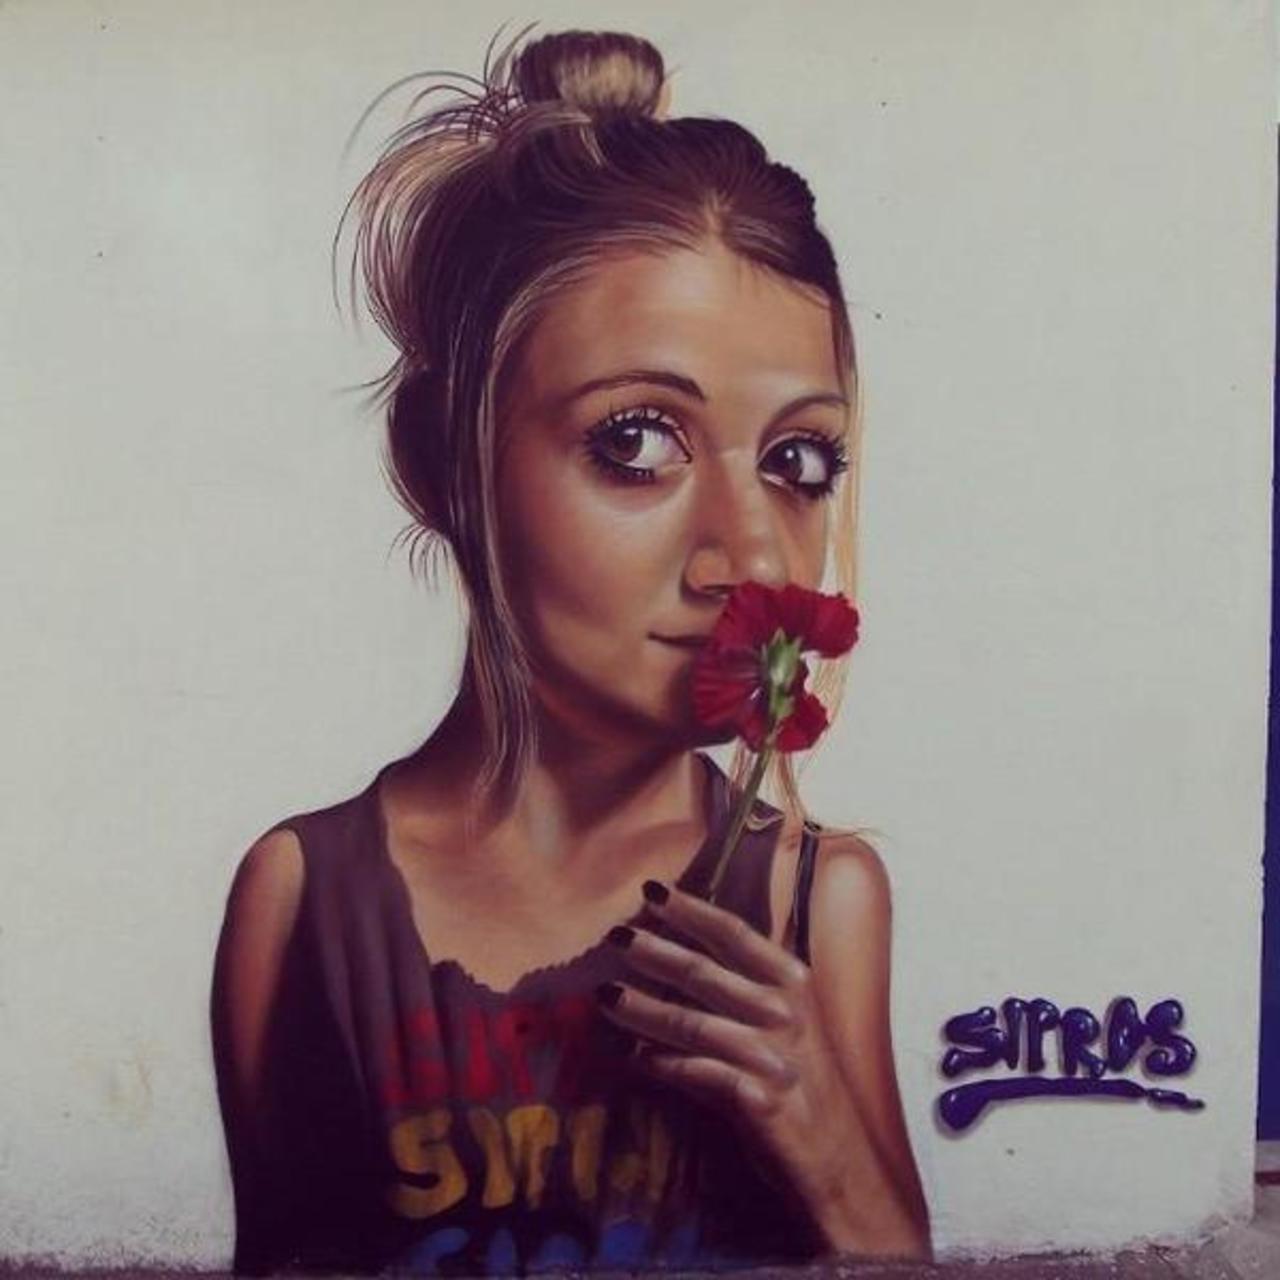 RT @BigArtBoost: RT @cakozlem76: #BigArtBoost #sipros #SaoPaulo #streetart #urbanart #graffiti http://buff.ly/1GhaJY5 http://t.co/0asPn9aDac